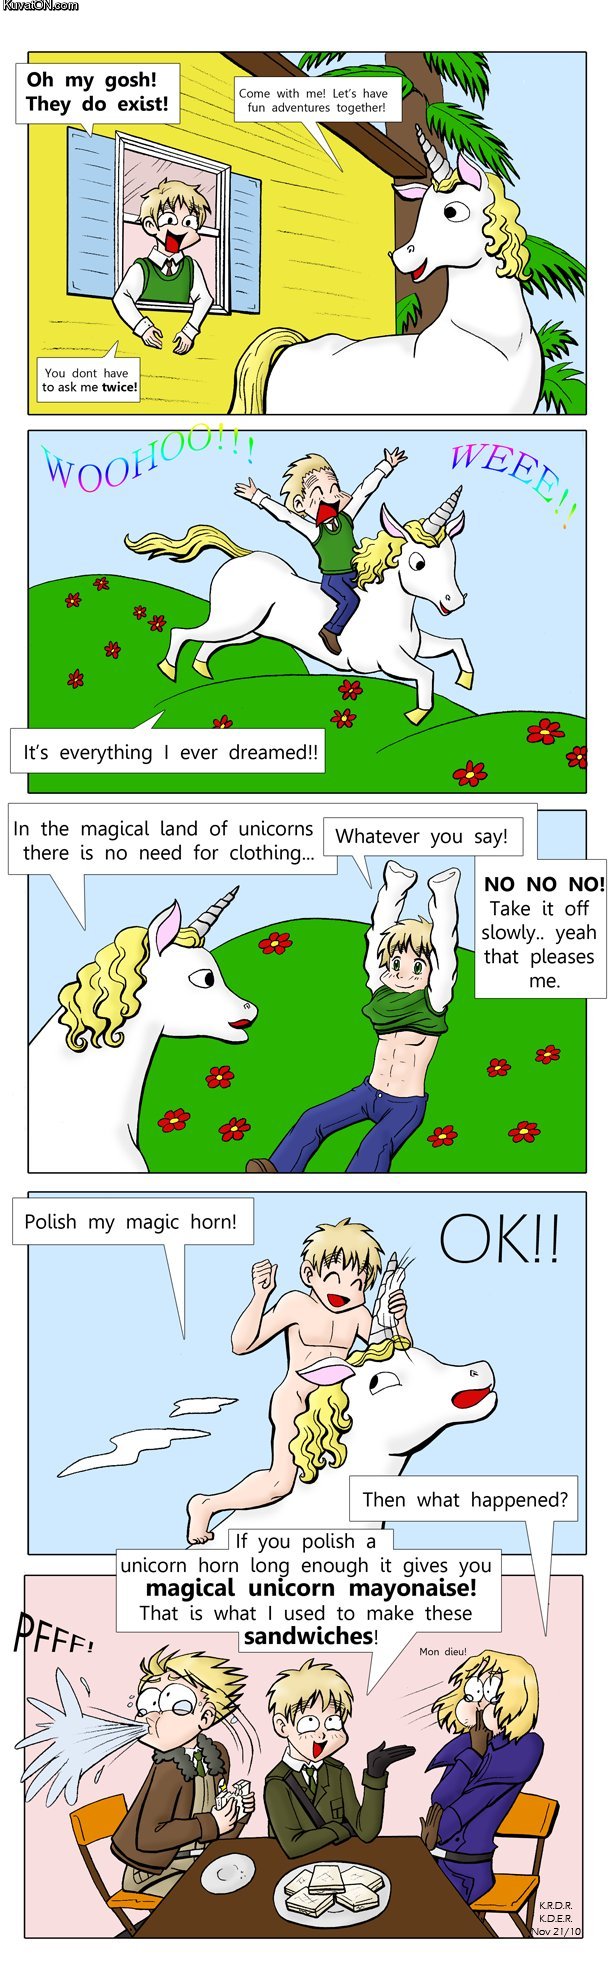 Magical unicorn mayonaise.